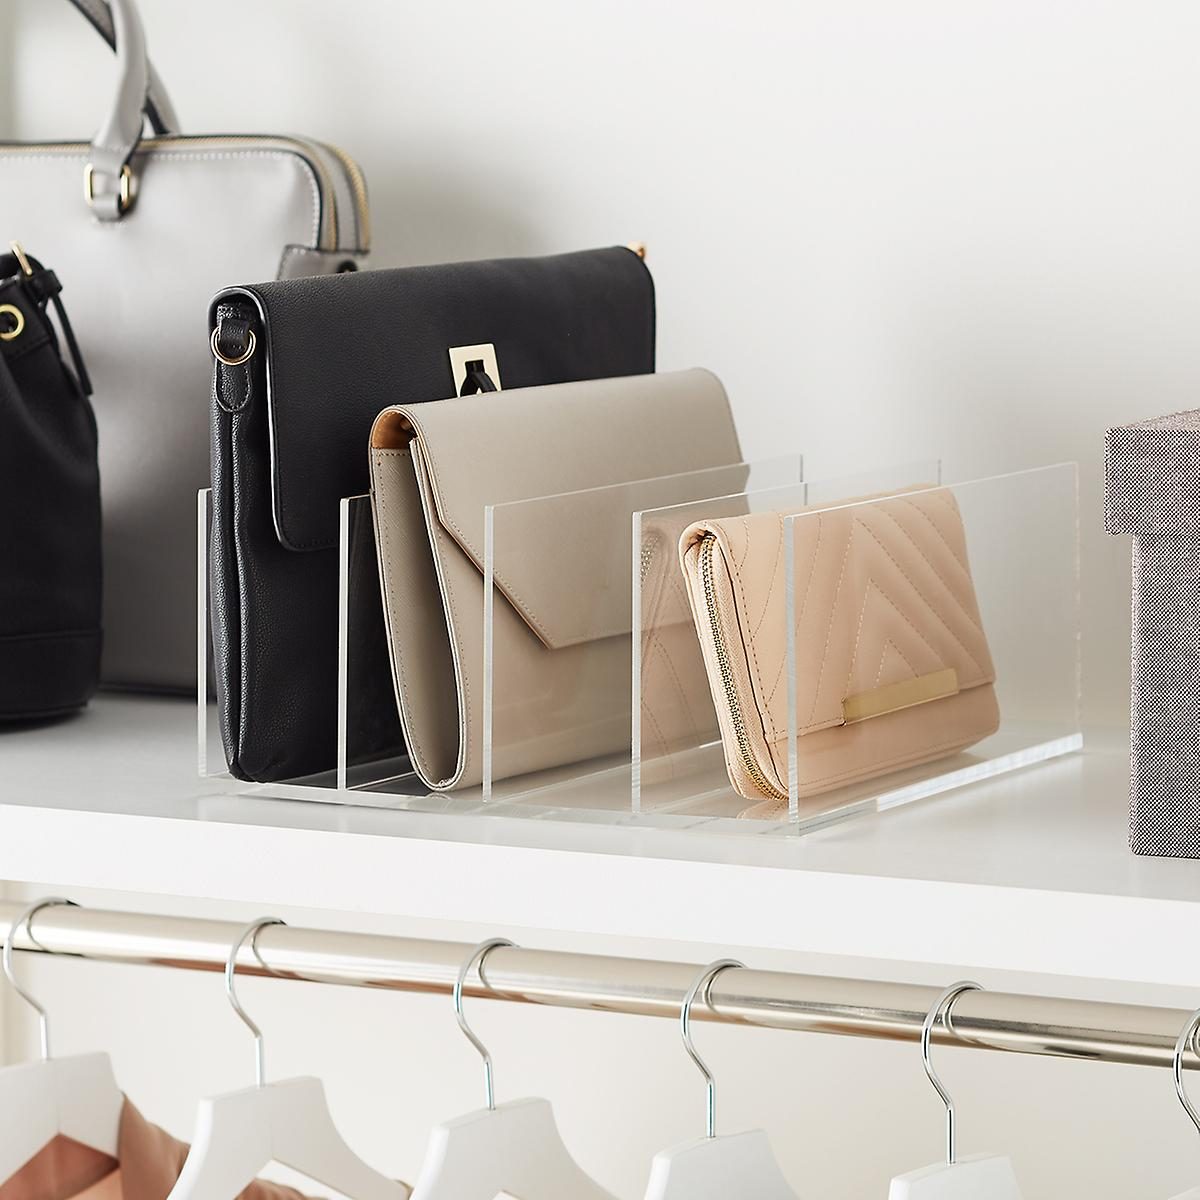 14 Unique Ways to Store Your Handbags